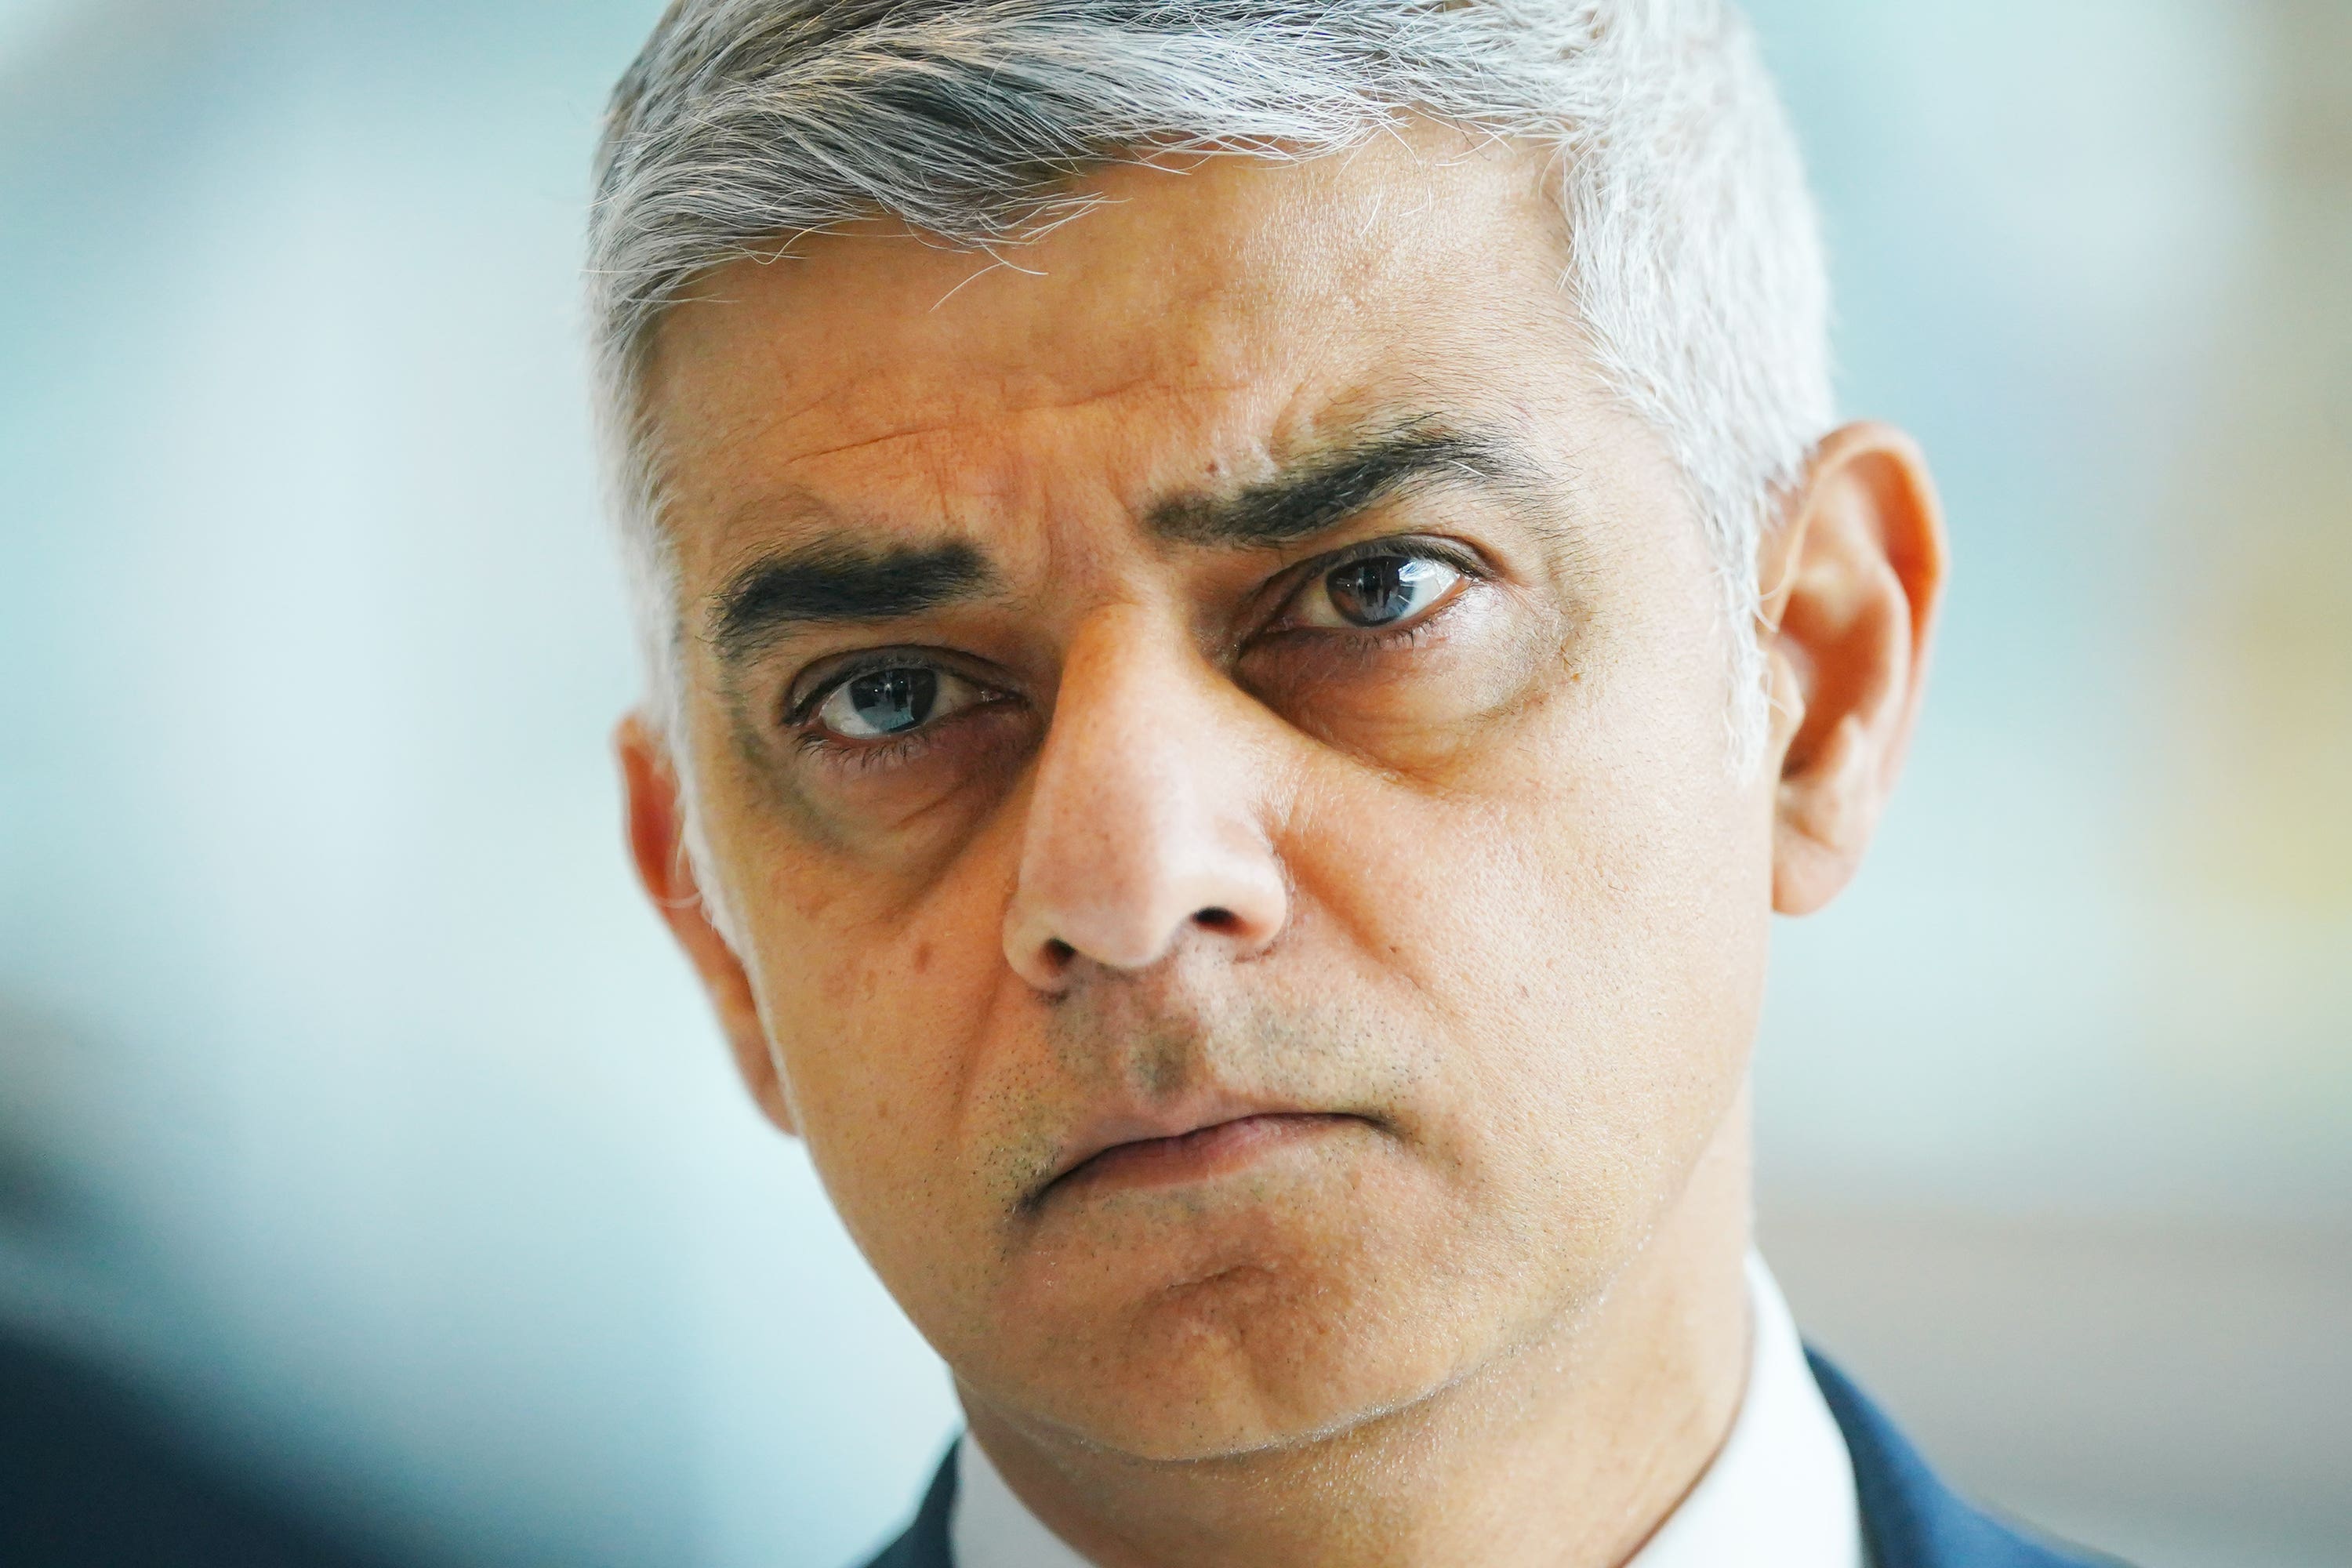 London Mayor Sadiq Khan is hoping for a third term